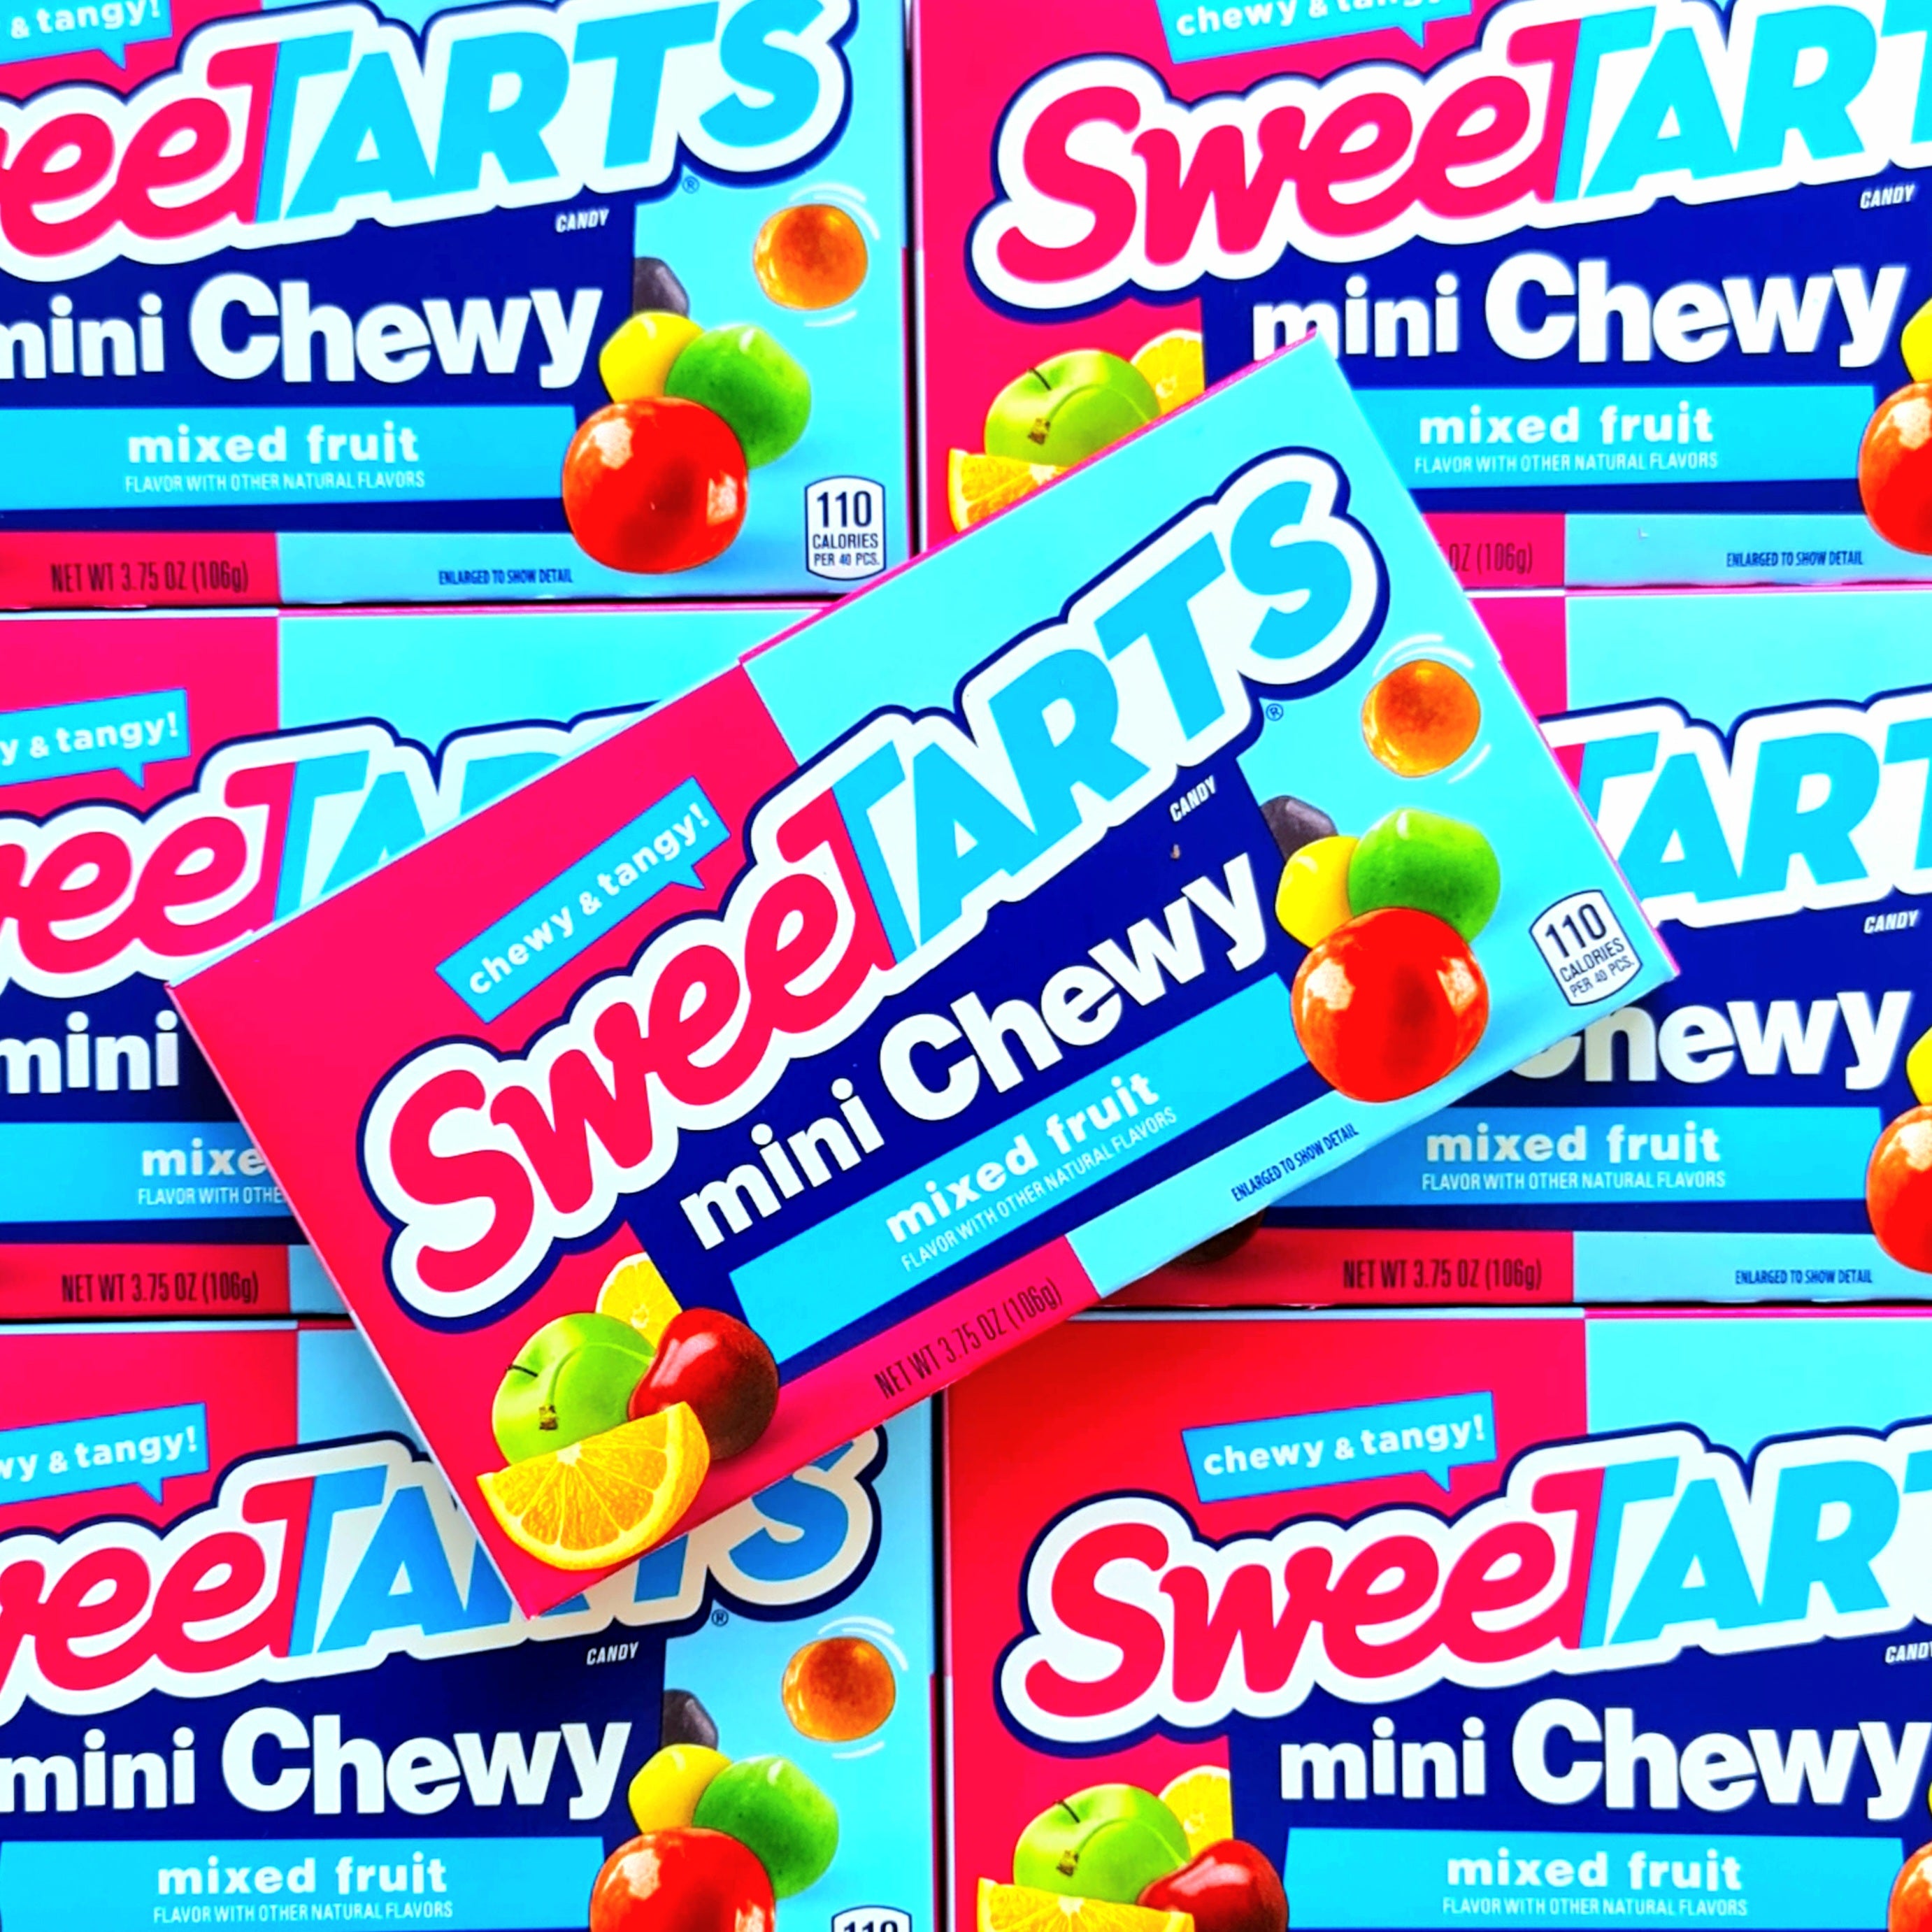 Sweetarts Mini Chewy Candy - Pik n Mix Lollies NZ